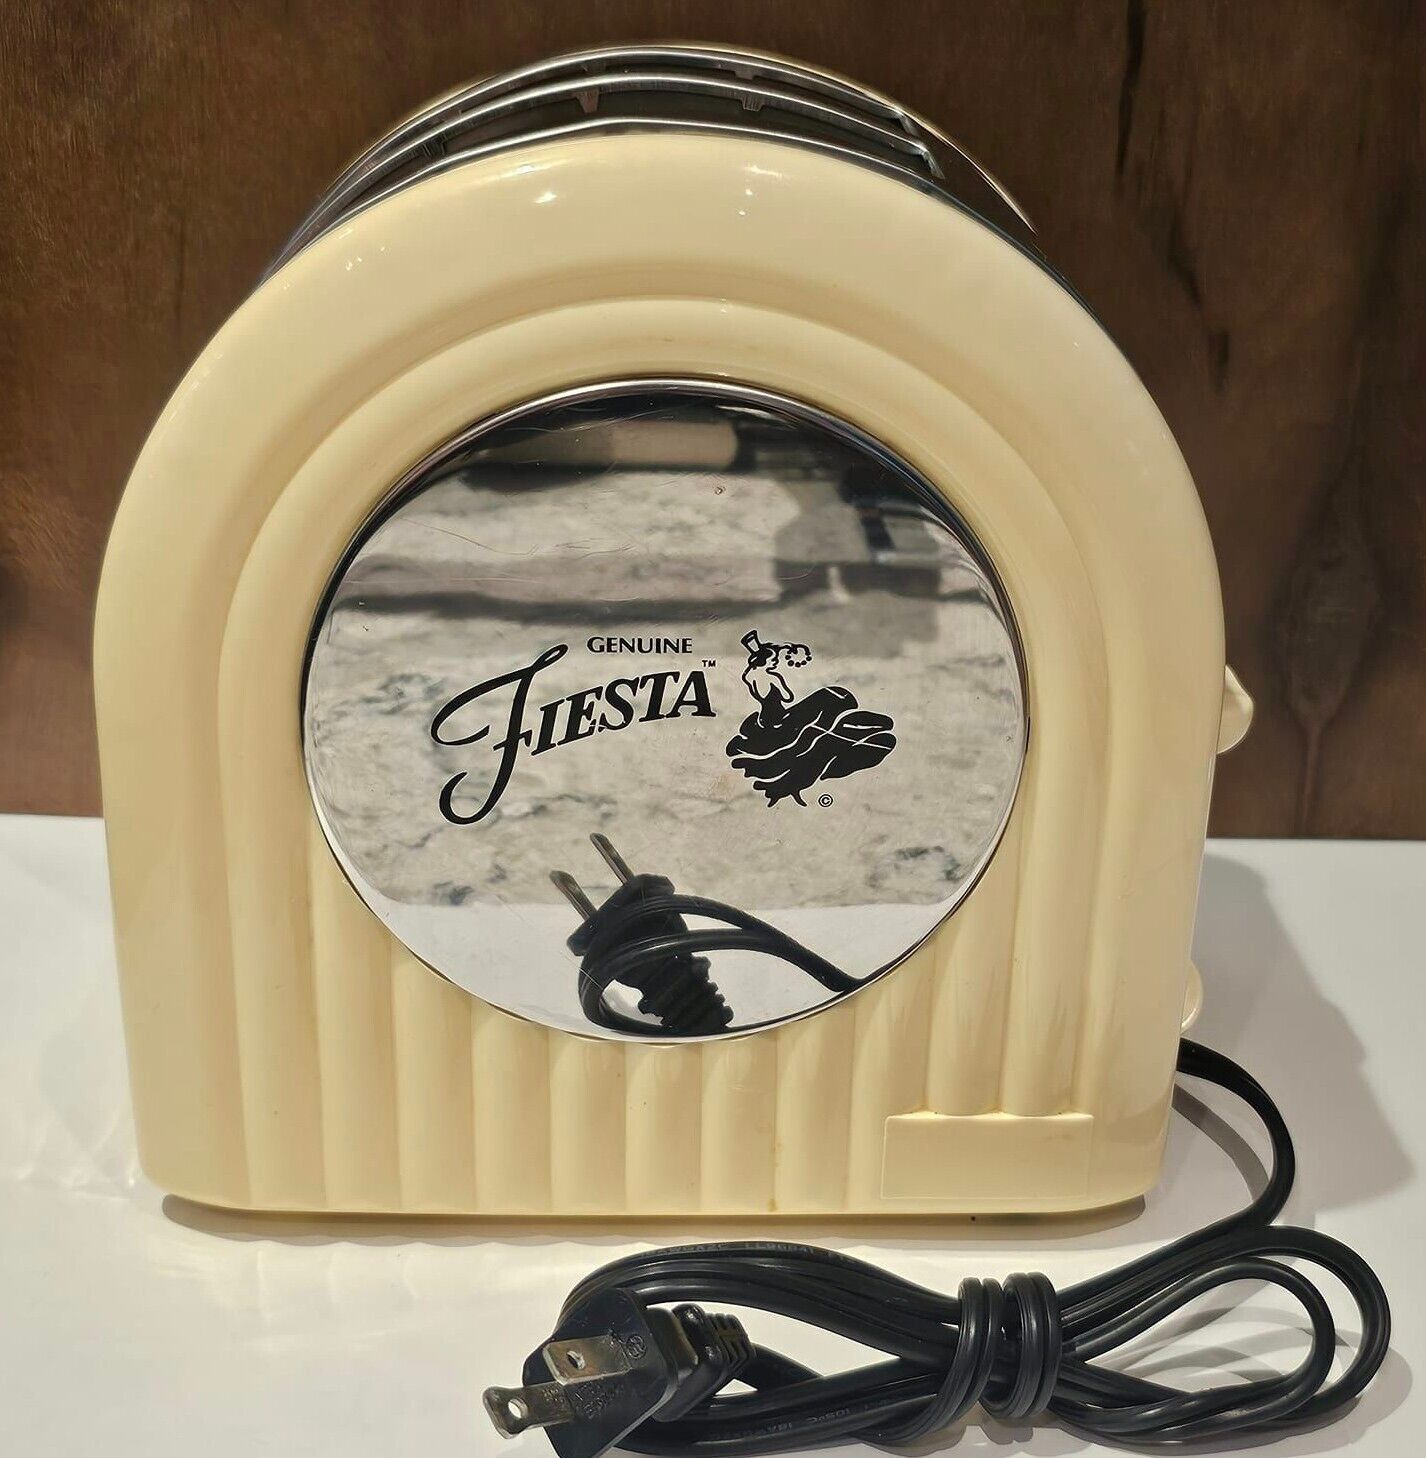 Fiesta Yellow 2-Slice Toaster TS-2012 Retro Art Deco Design Works Excellent